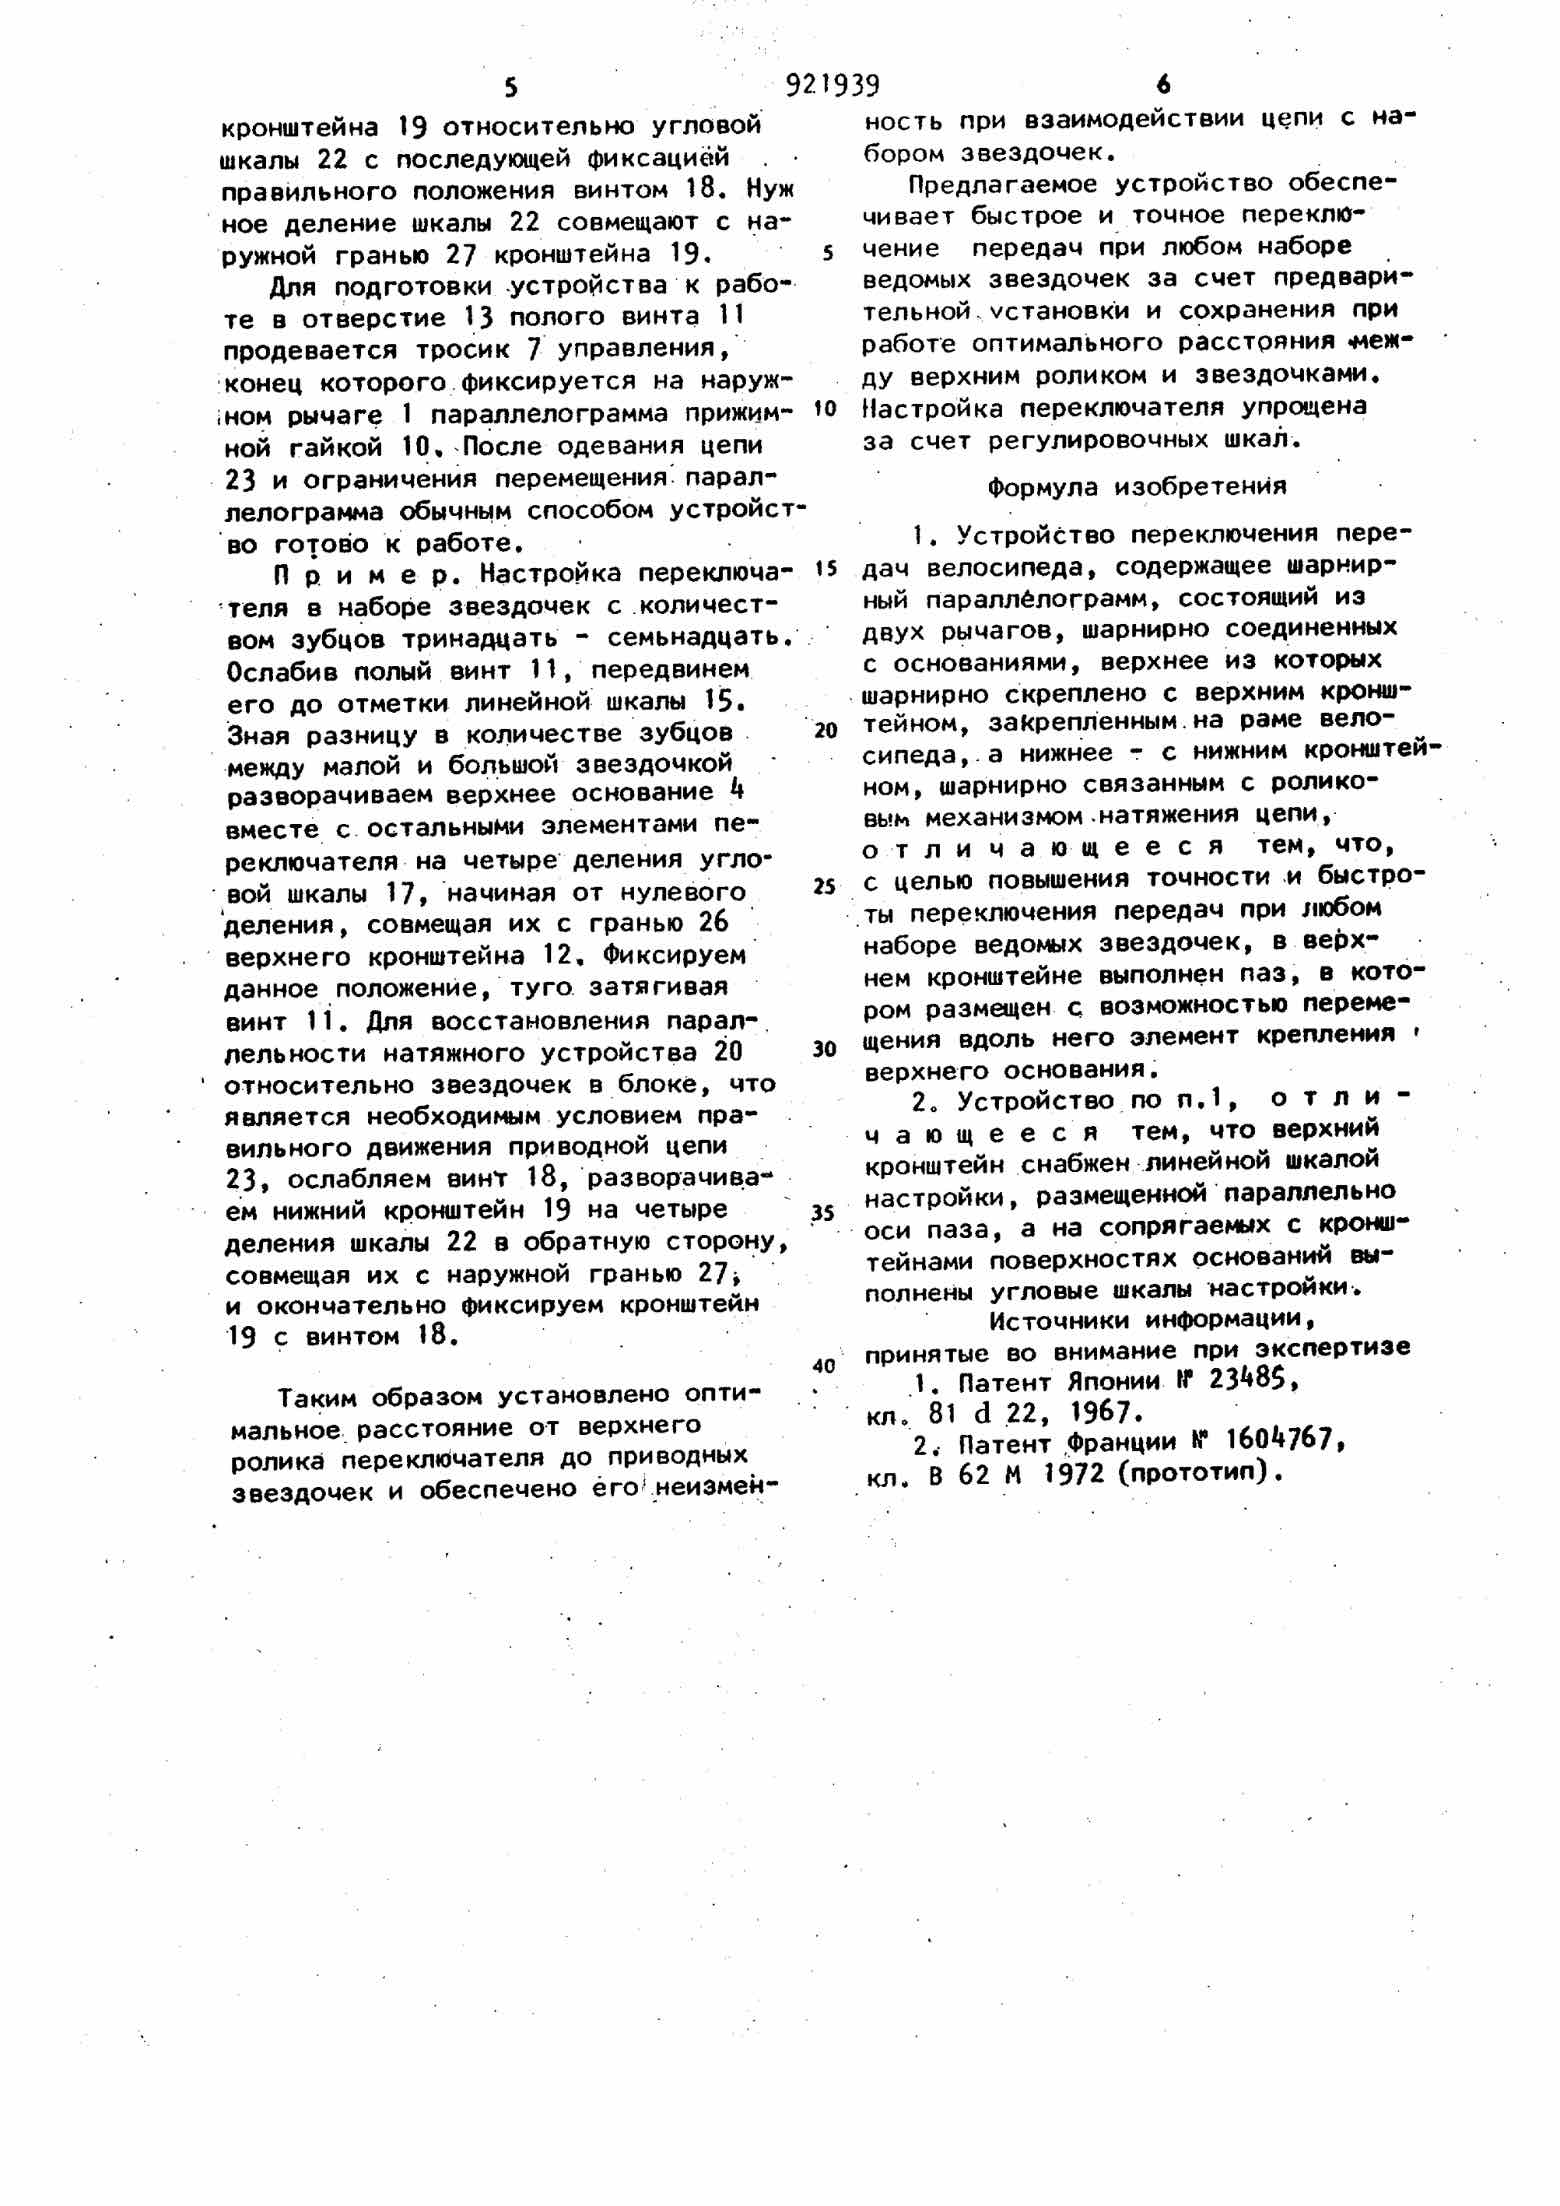 USSR Patent 921,939 - unknown derailleur scan 3 main image